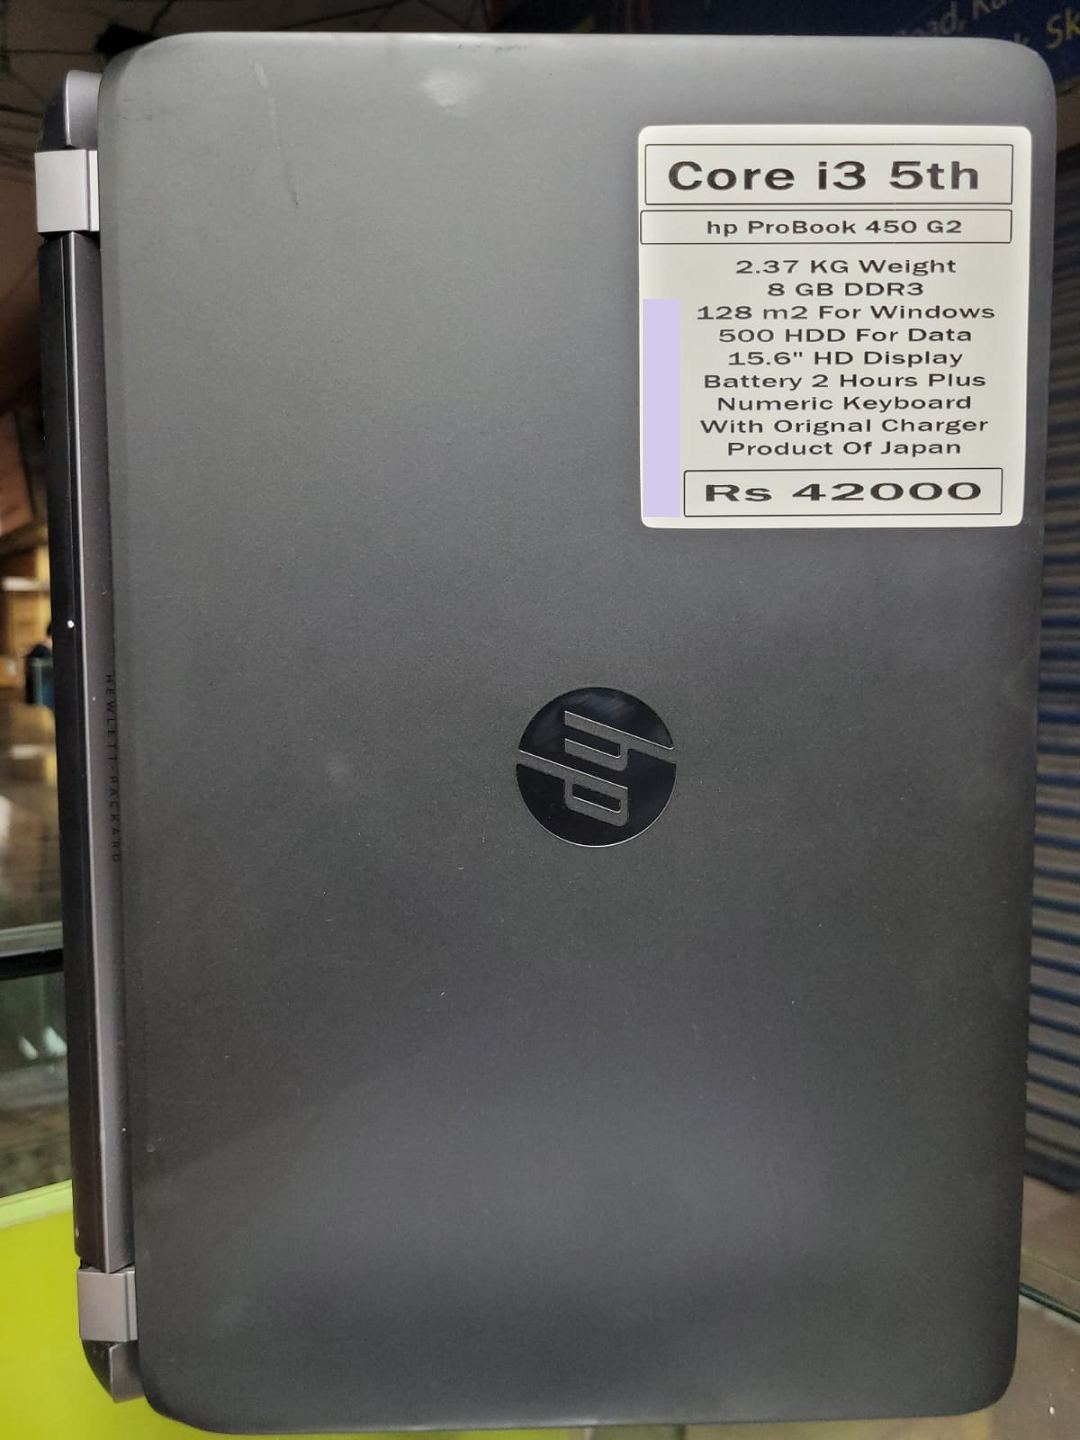 Ho Probook 450 G2 core i3 5th Generation Notebook